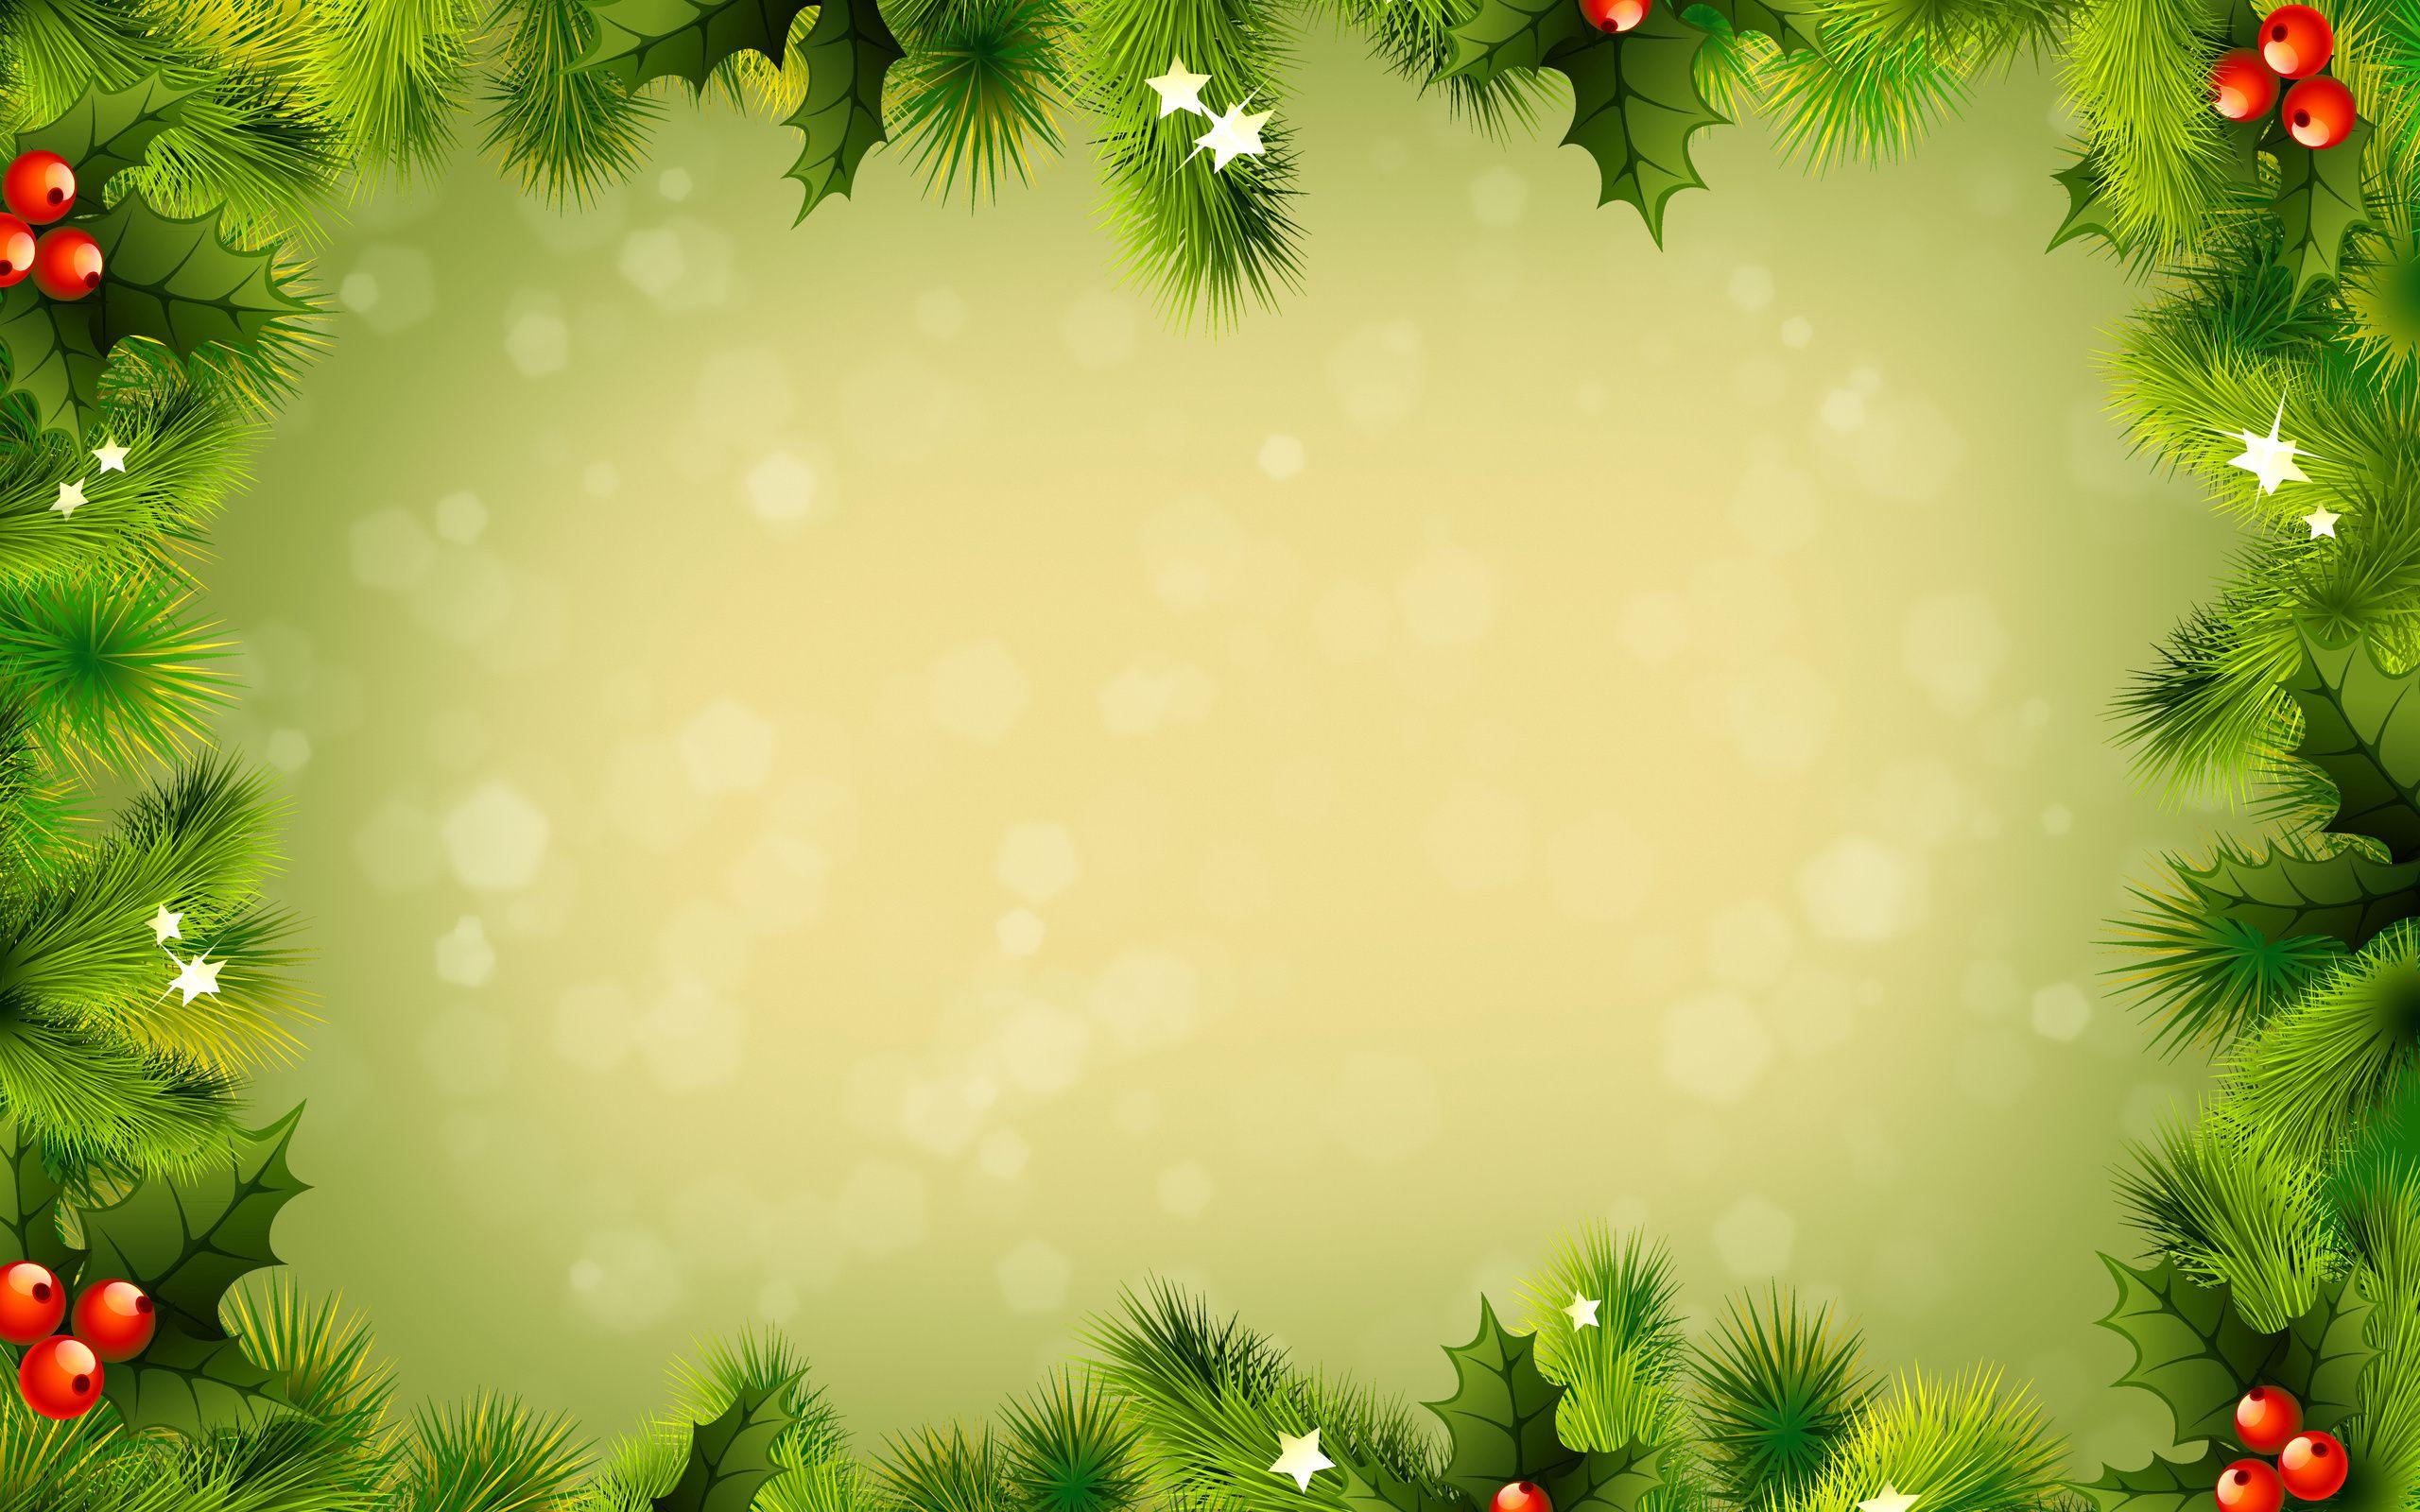 Christmas Frame Wallpaper 46999 2560x1600 px